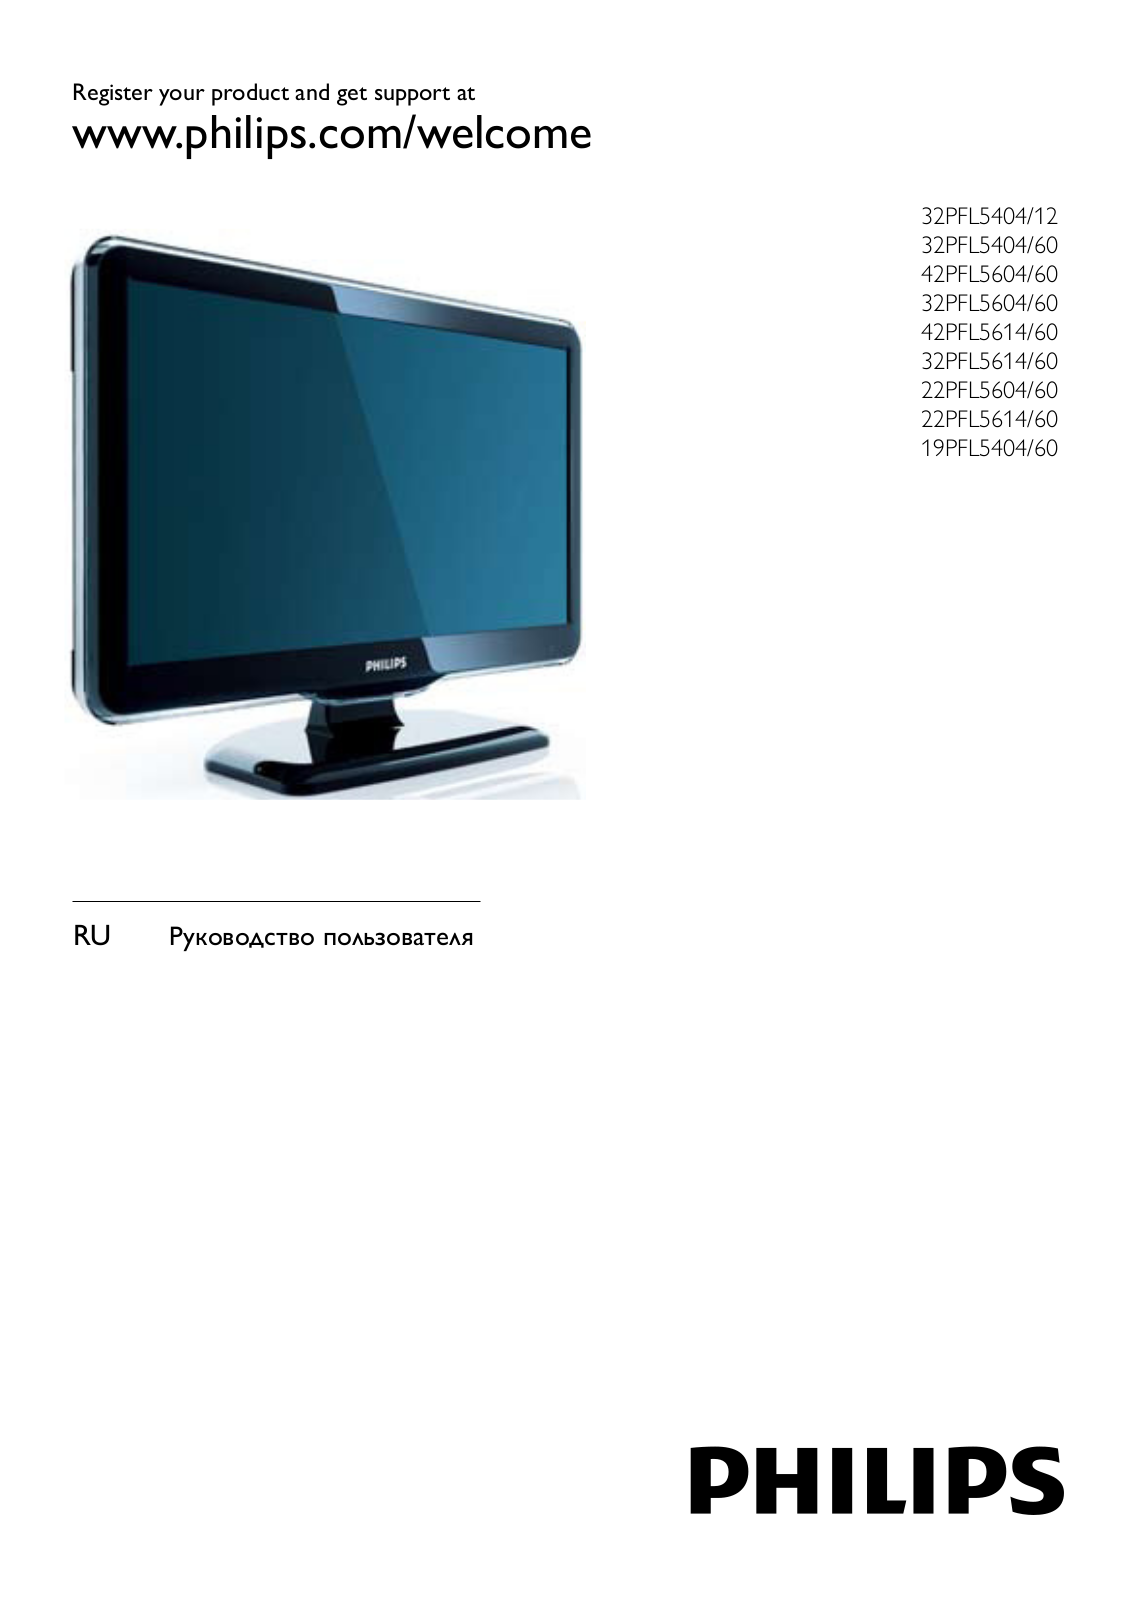 Philips 42PFL5614 User Manual